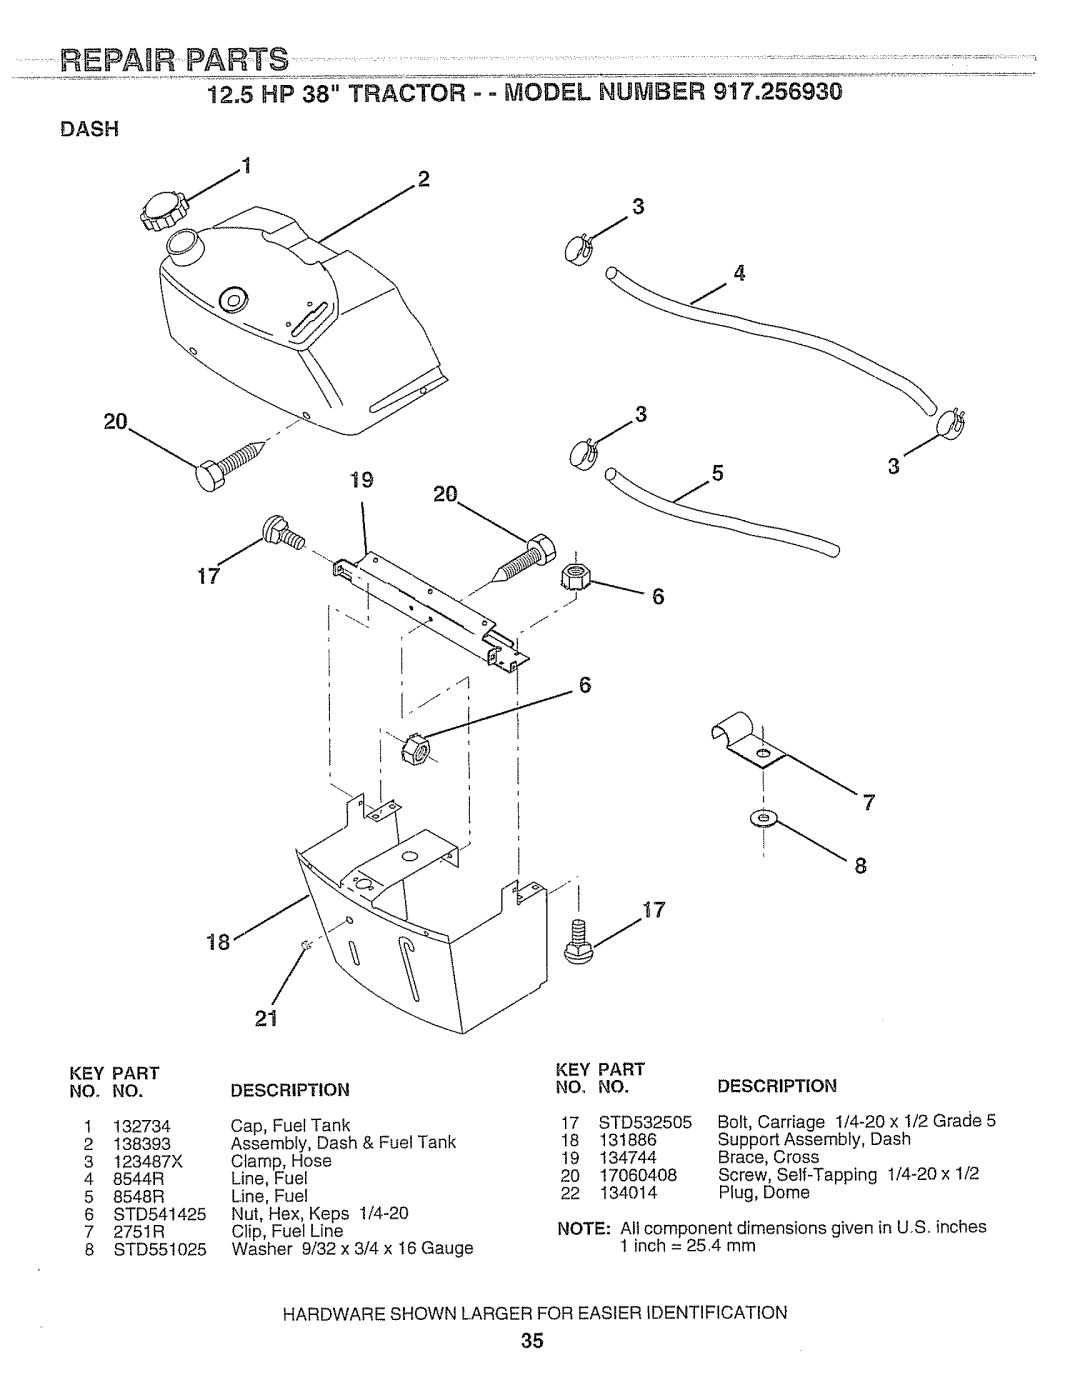 Craftsman 917.25693 owner manual 12.5 HP 38 TRACTOR -- MODEL NUMBER, Part 